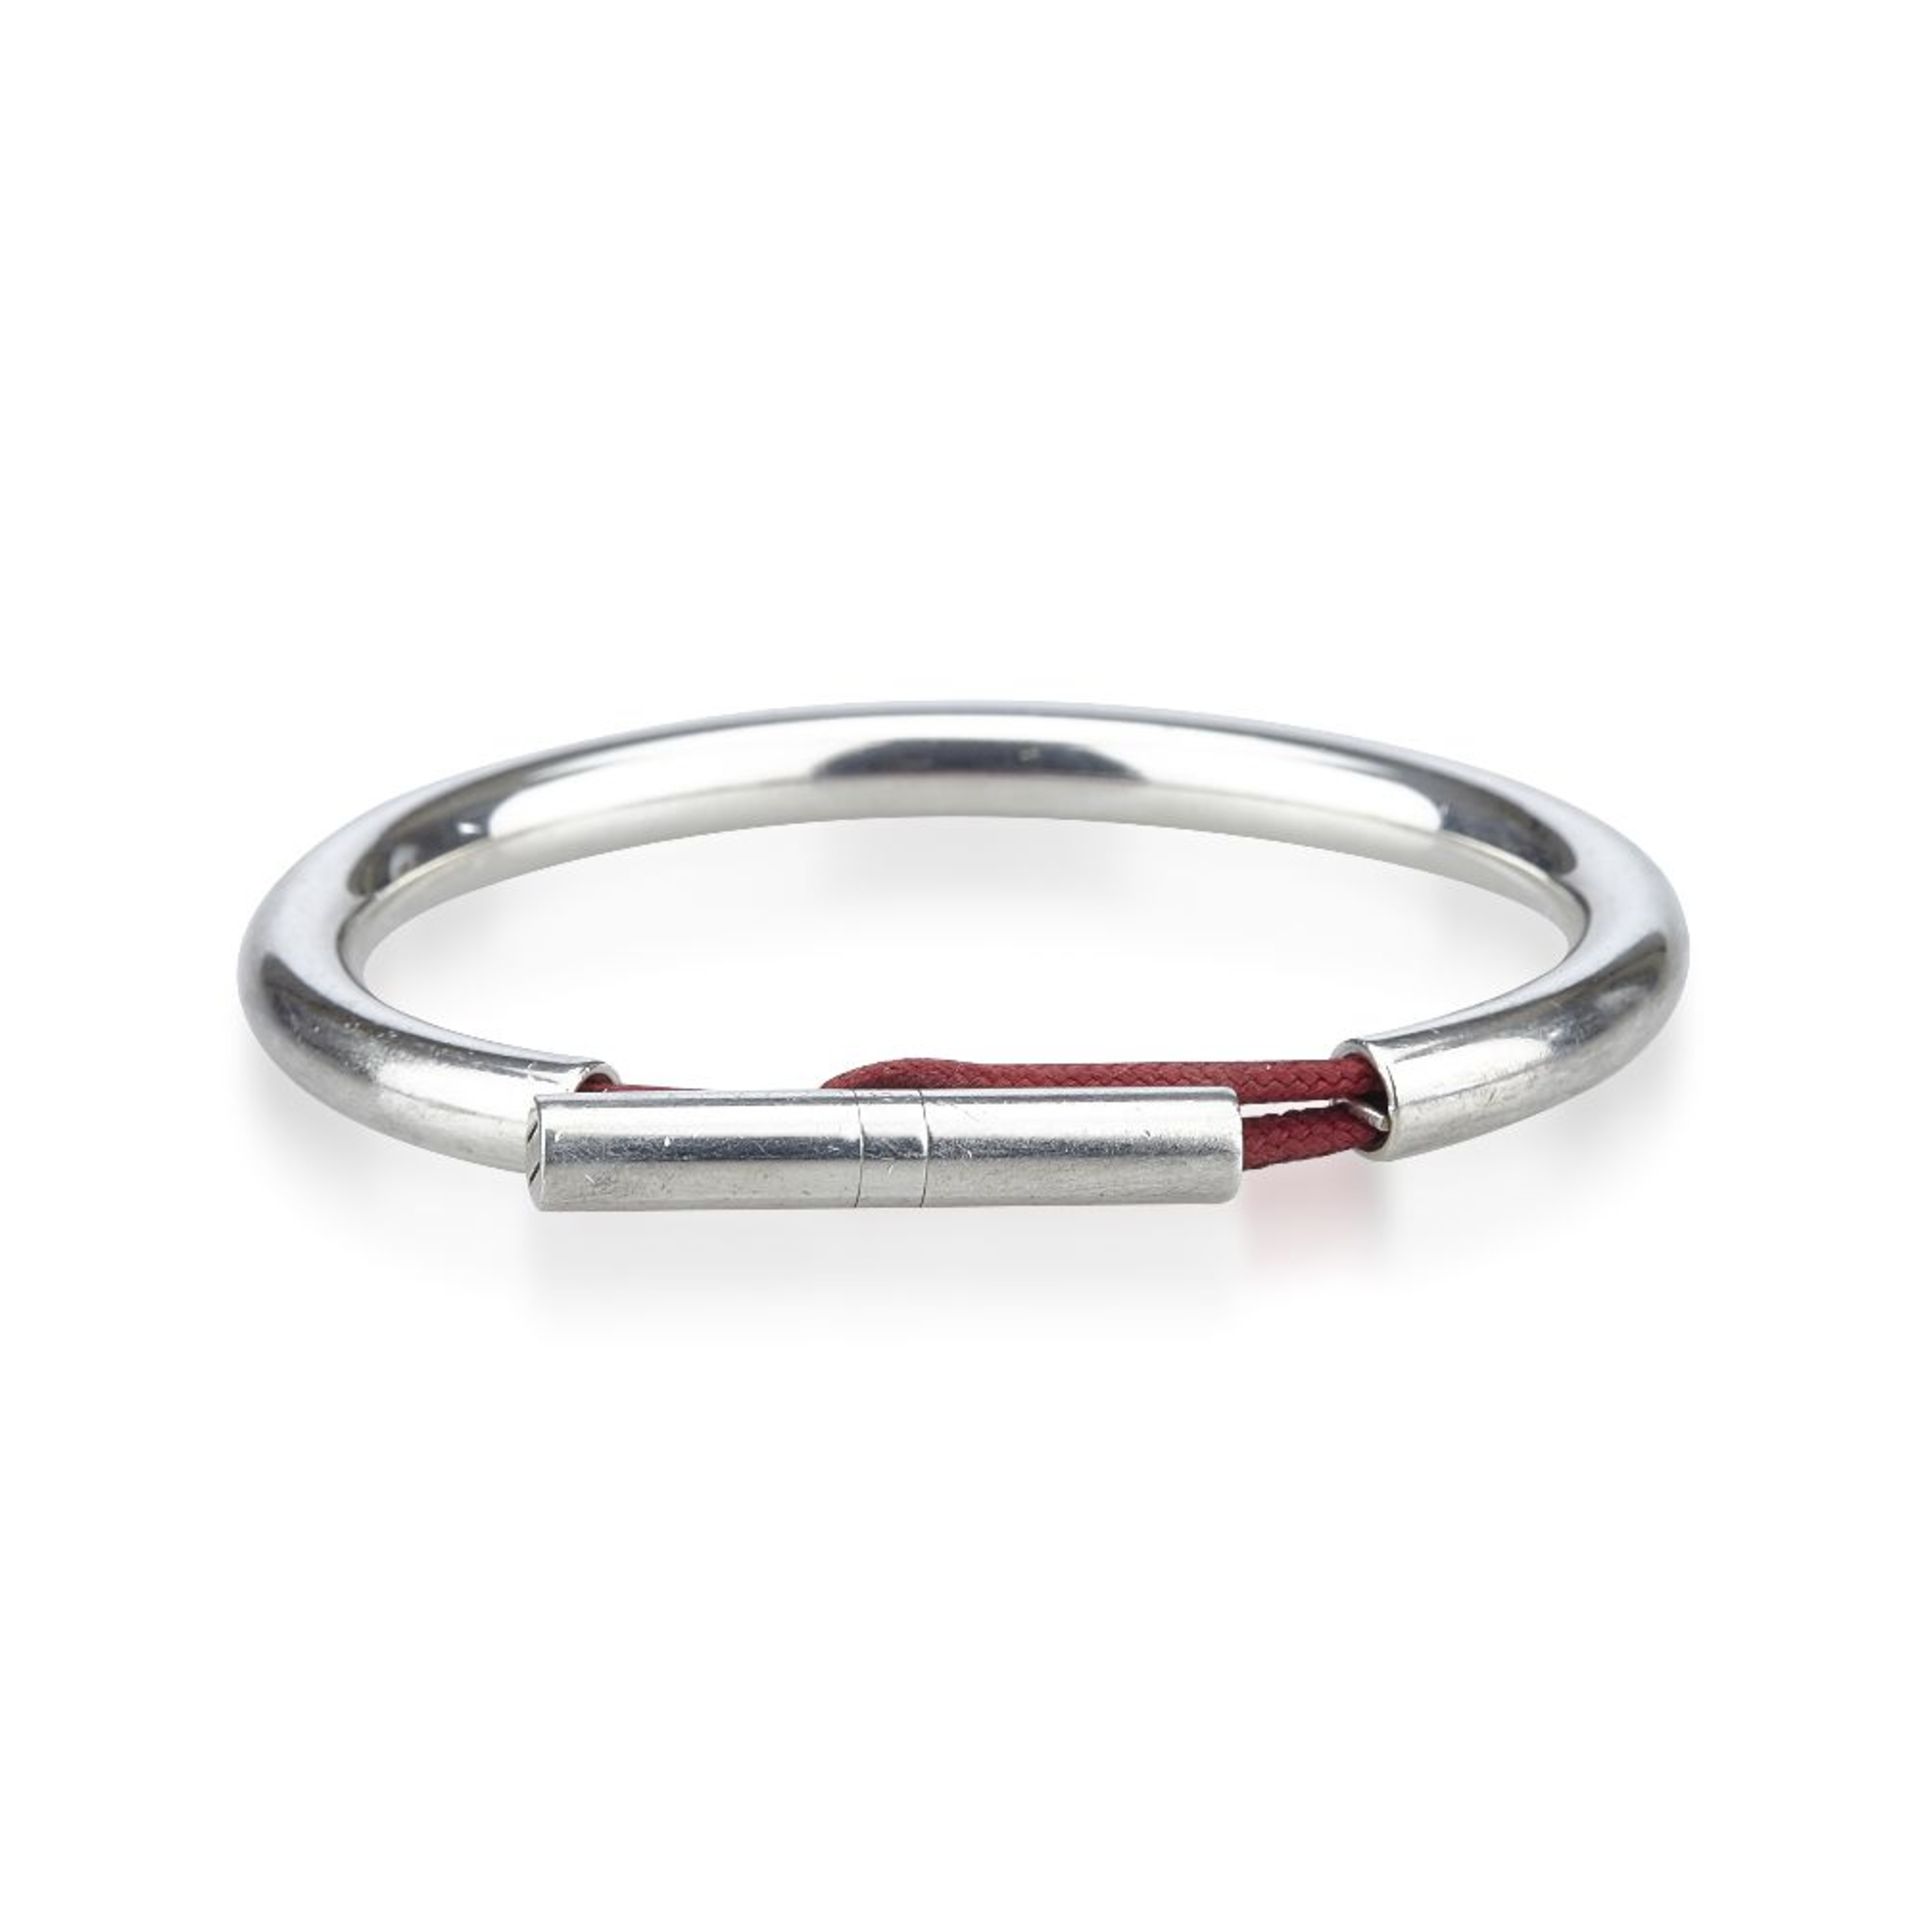 An Hermès 'Skipper' bracelet,featuring a silver and chemical fibre body